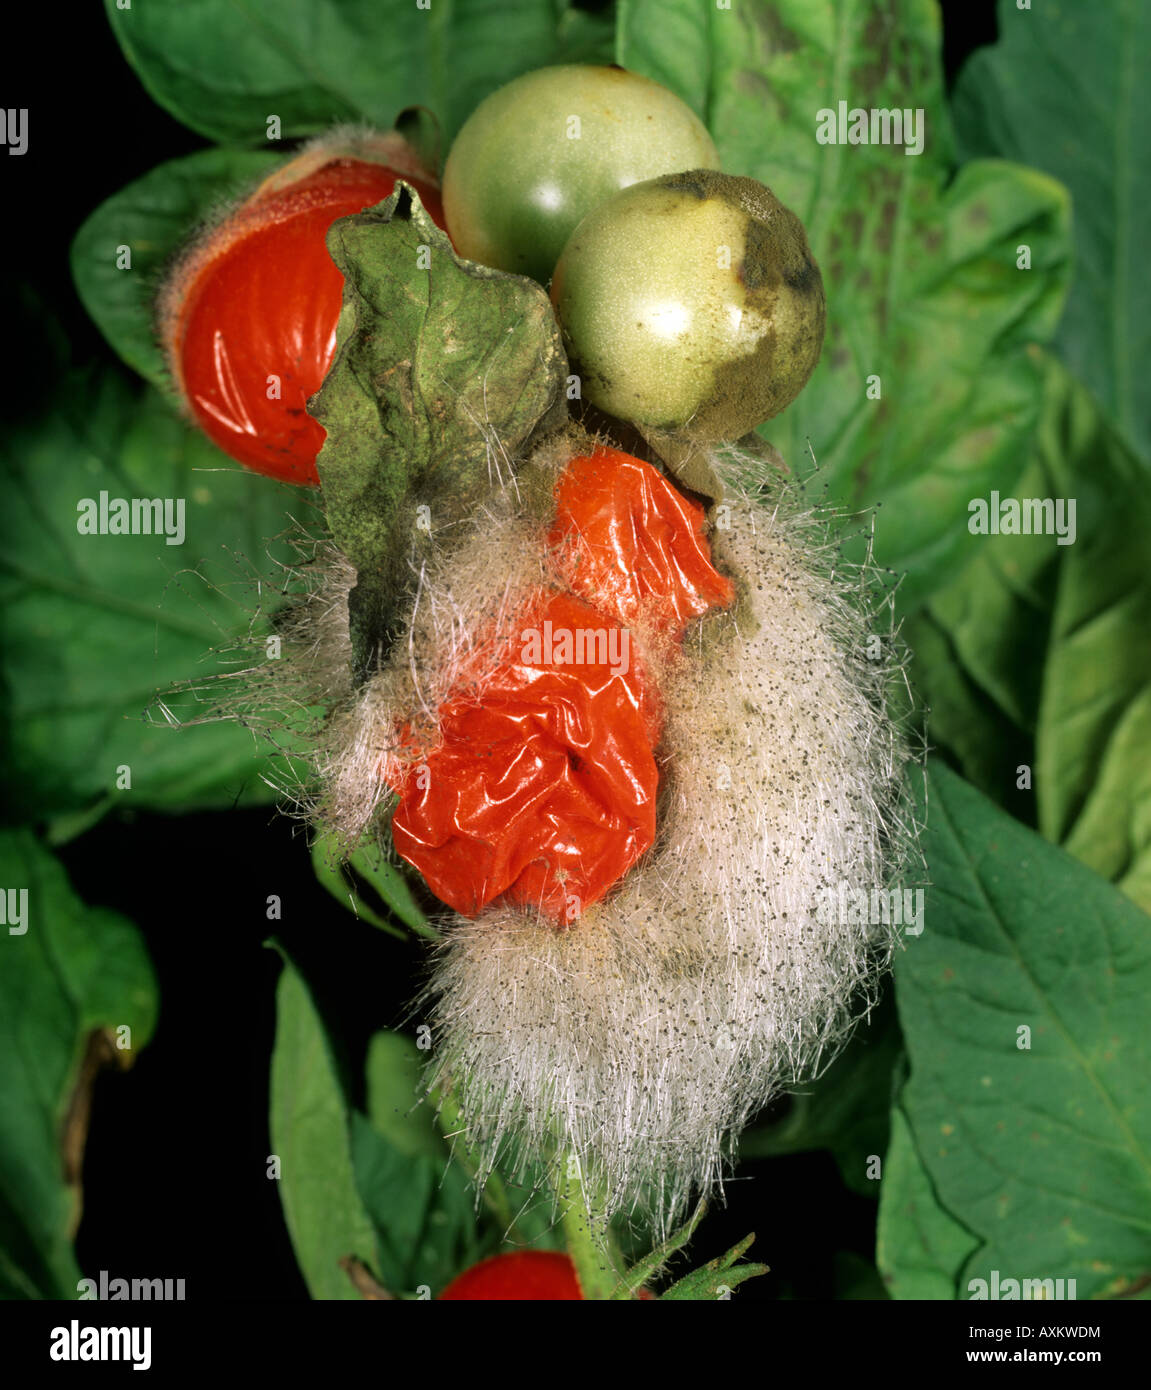 Saprophytic mould Rhizopus sp developing hyphae fruiting bodies on late season tomato Stock Photo